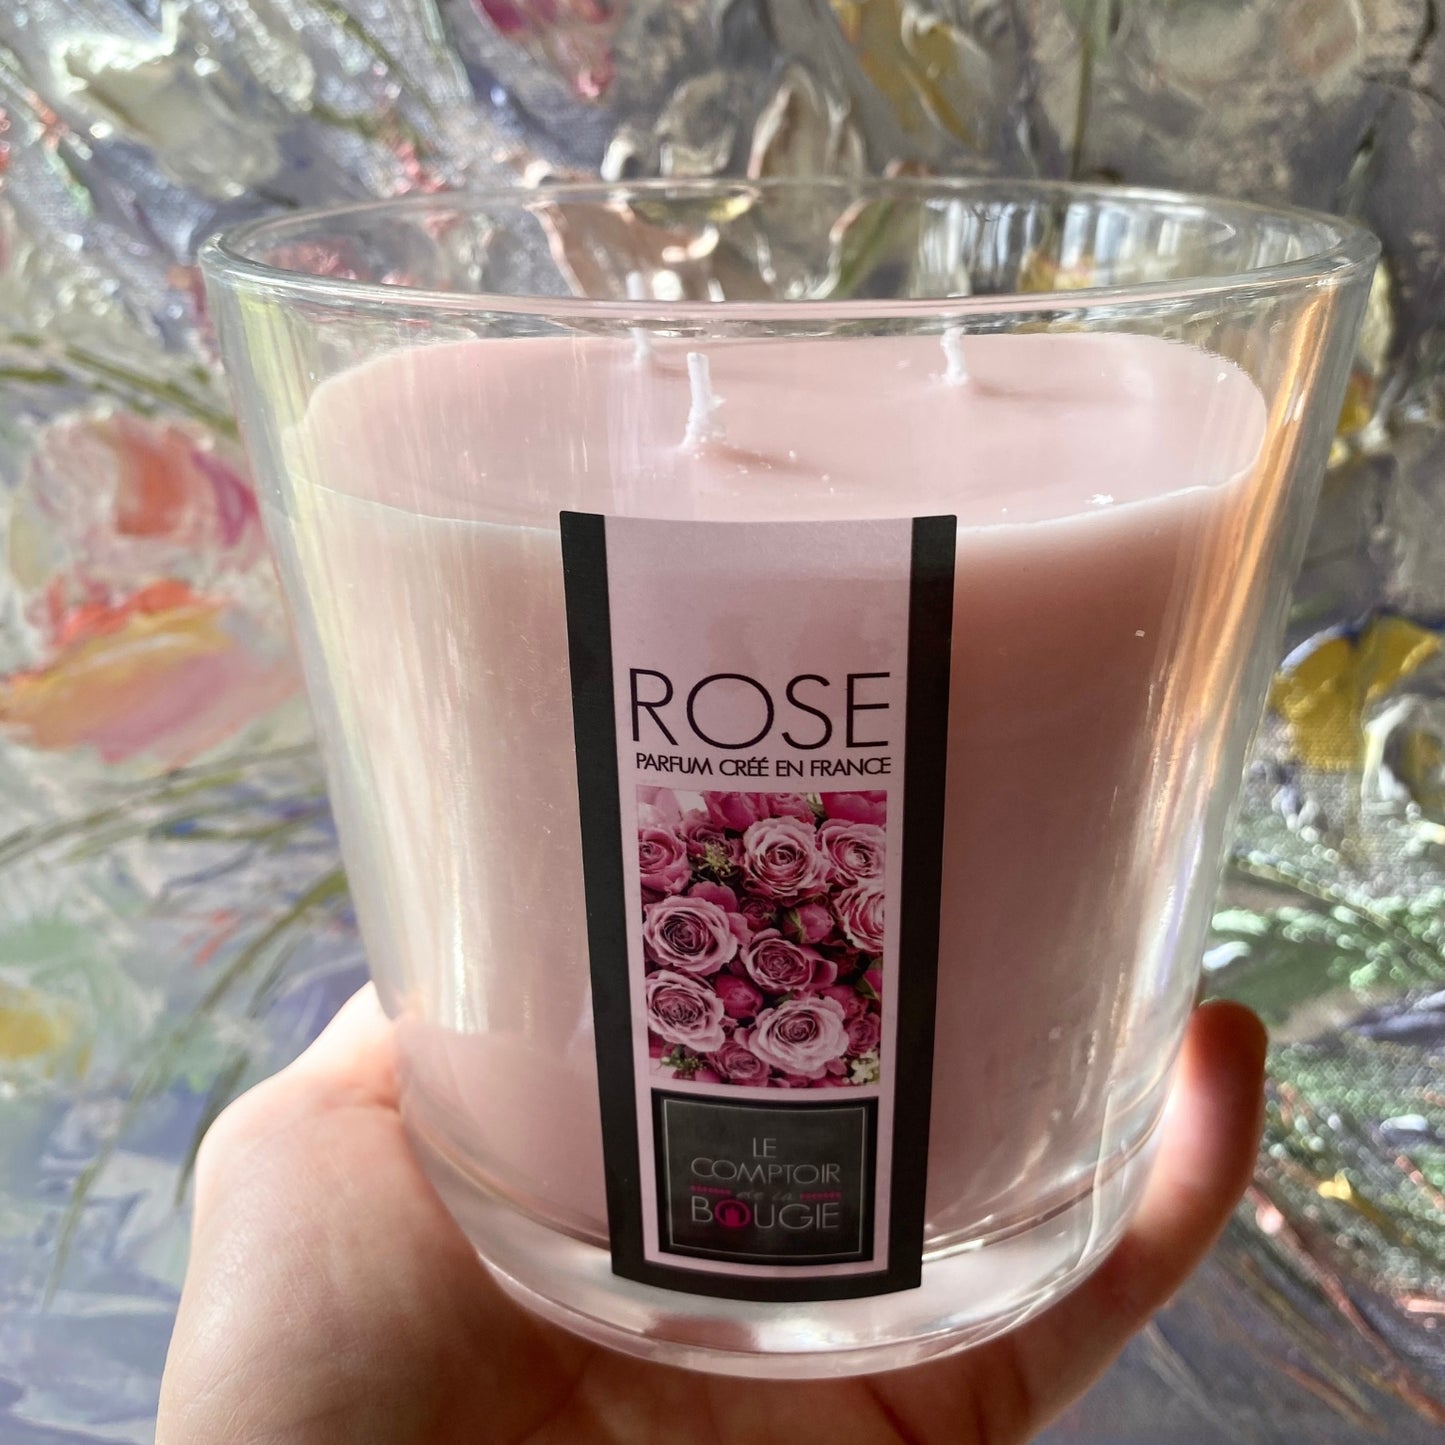 Aromātiskā svece ar rožu aromātu, 500g